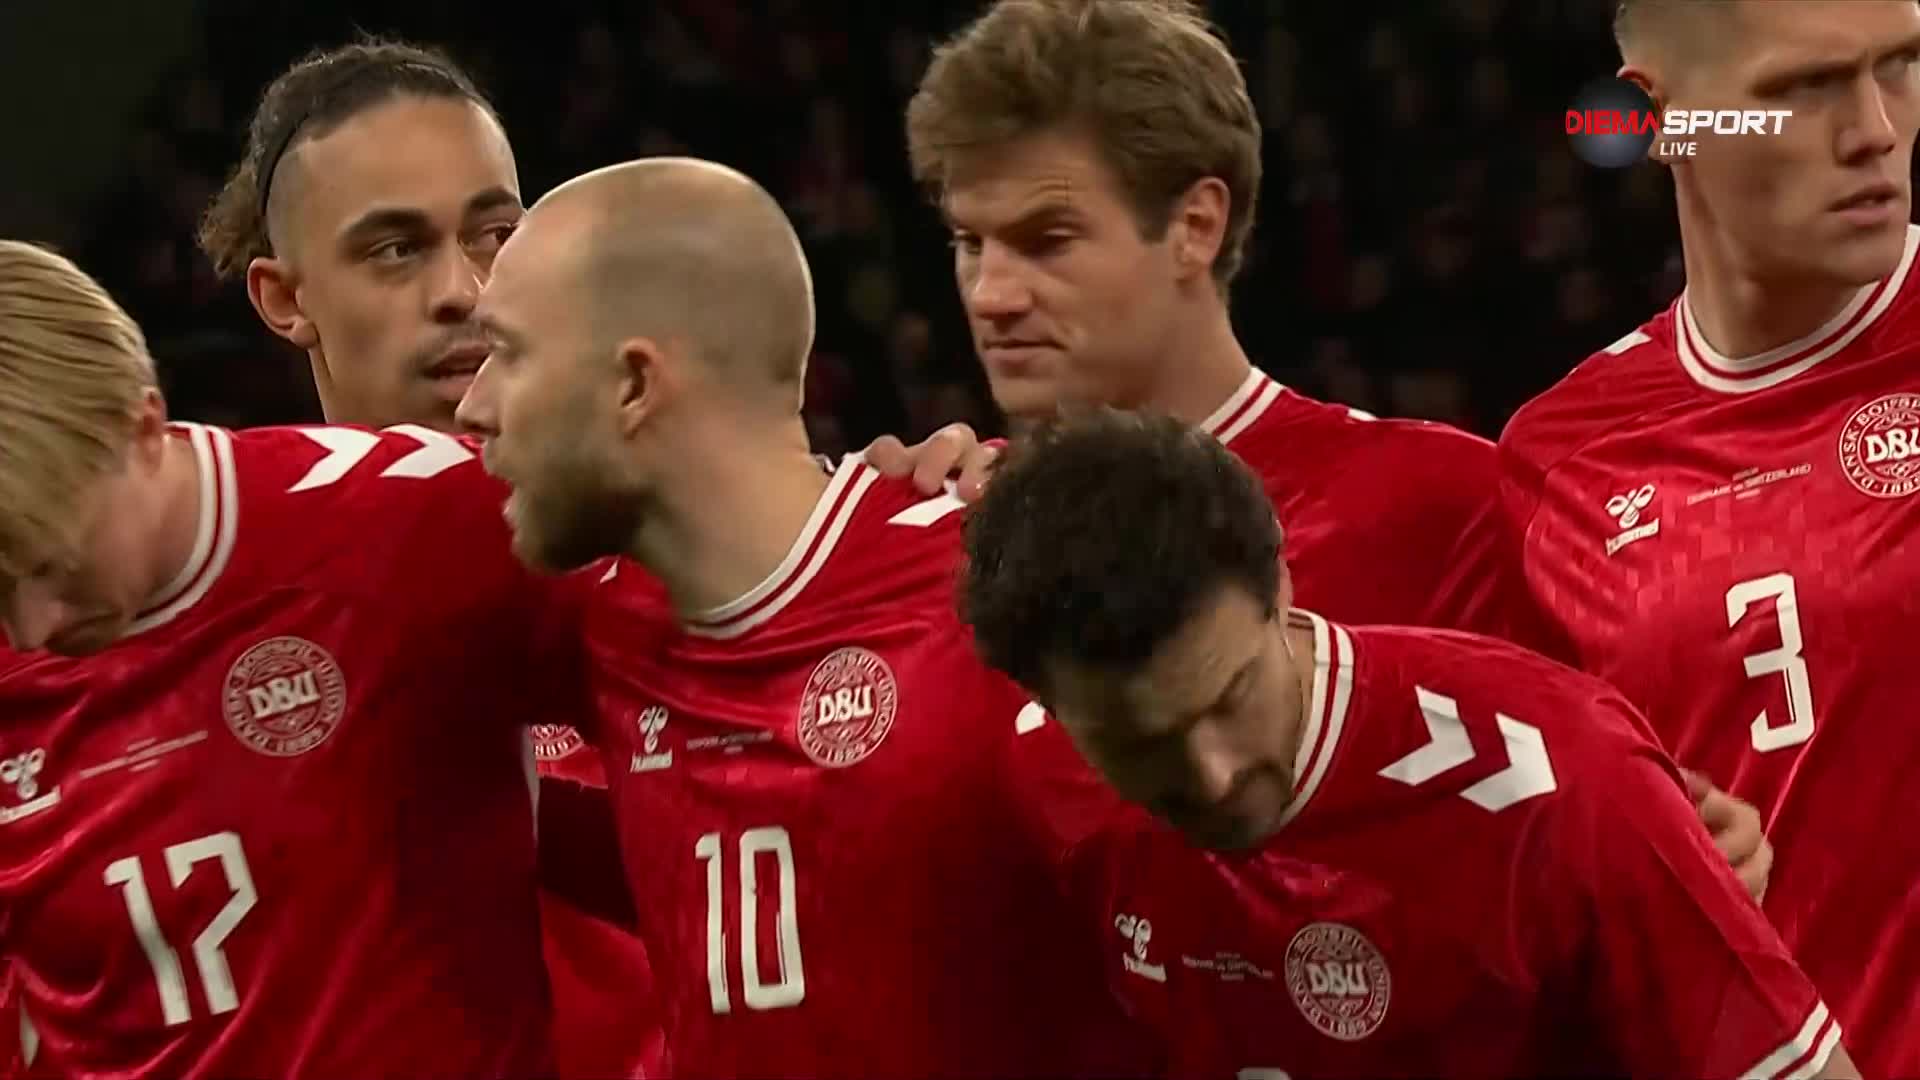 Дания - Швейцария 0:0 /репортаж/